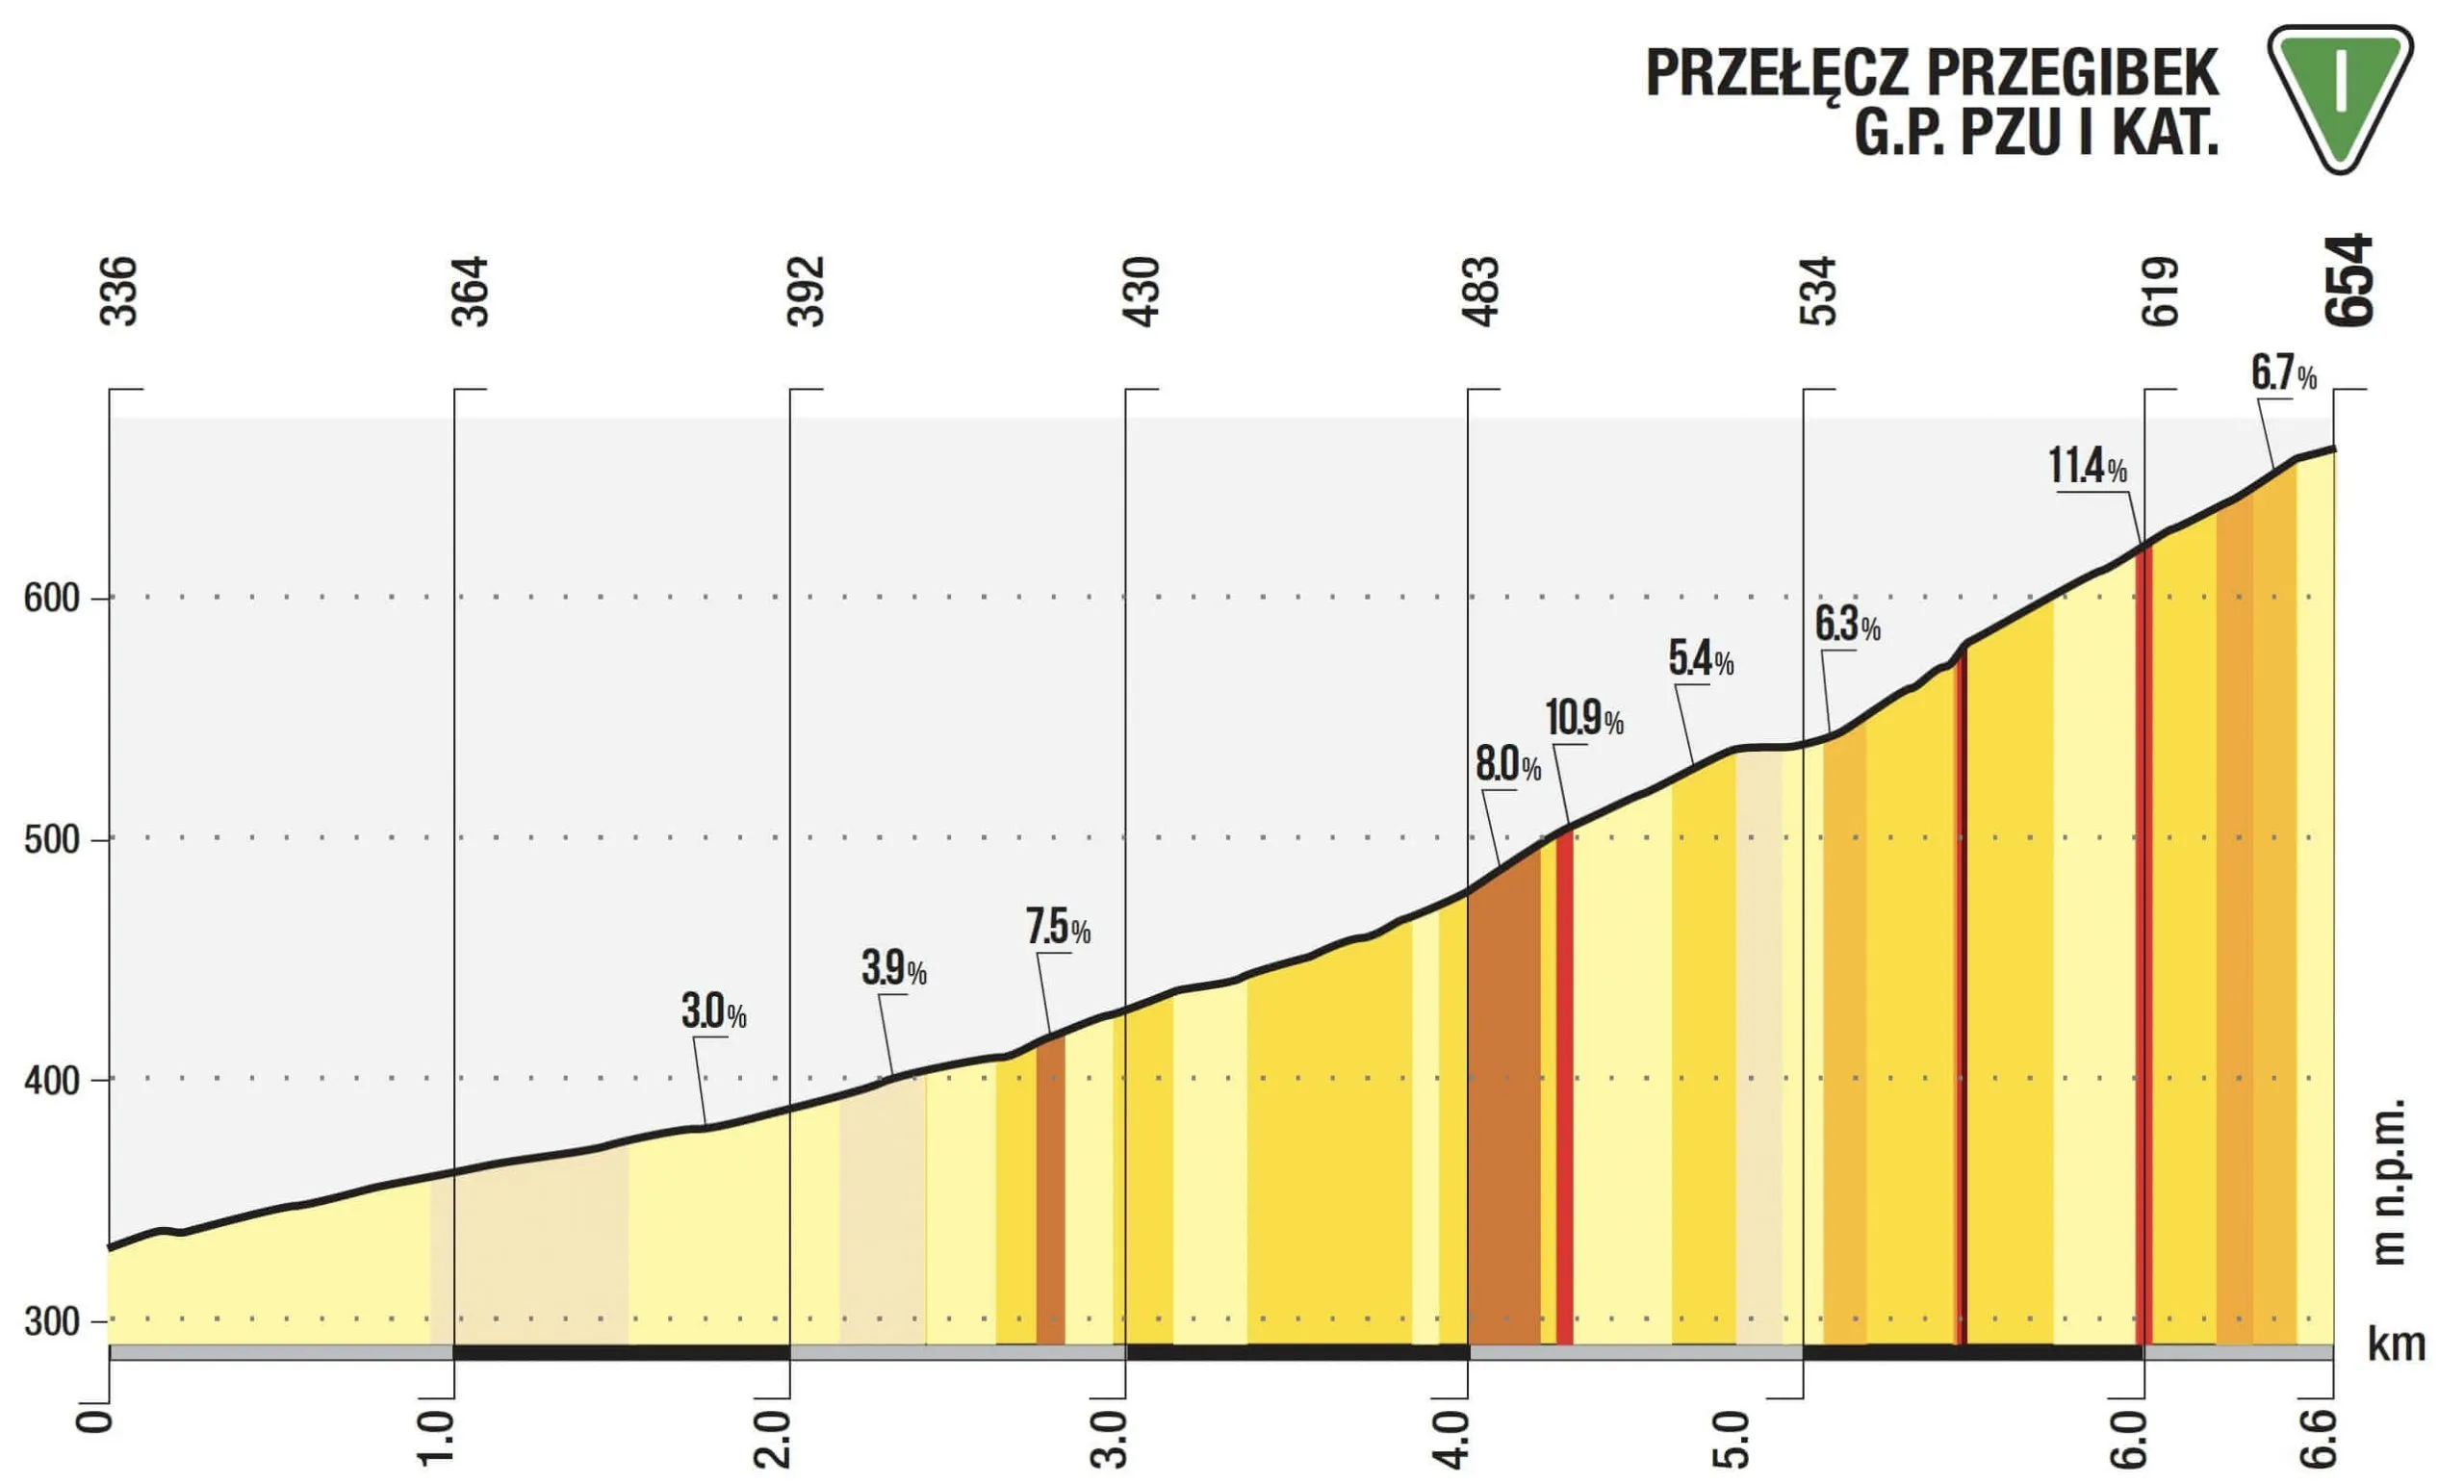 Przełęcz Przegibek - first-category climb Tour de Pologne 2021